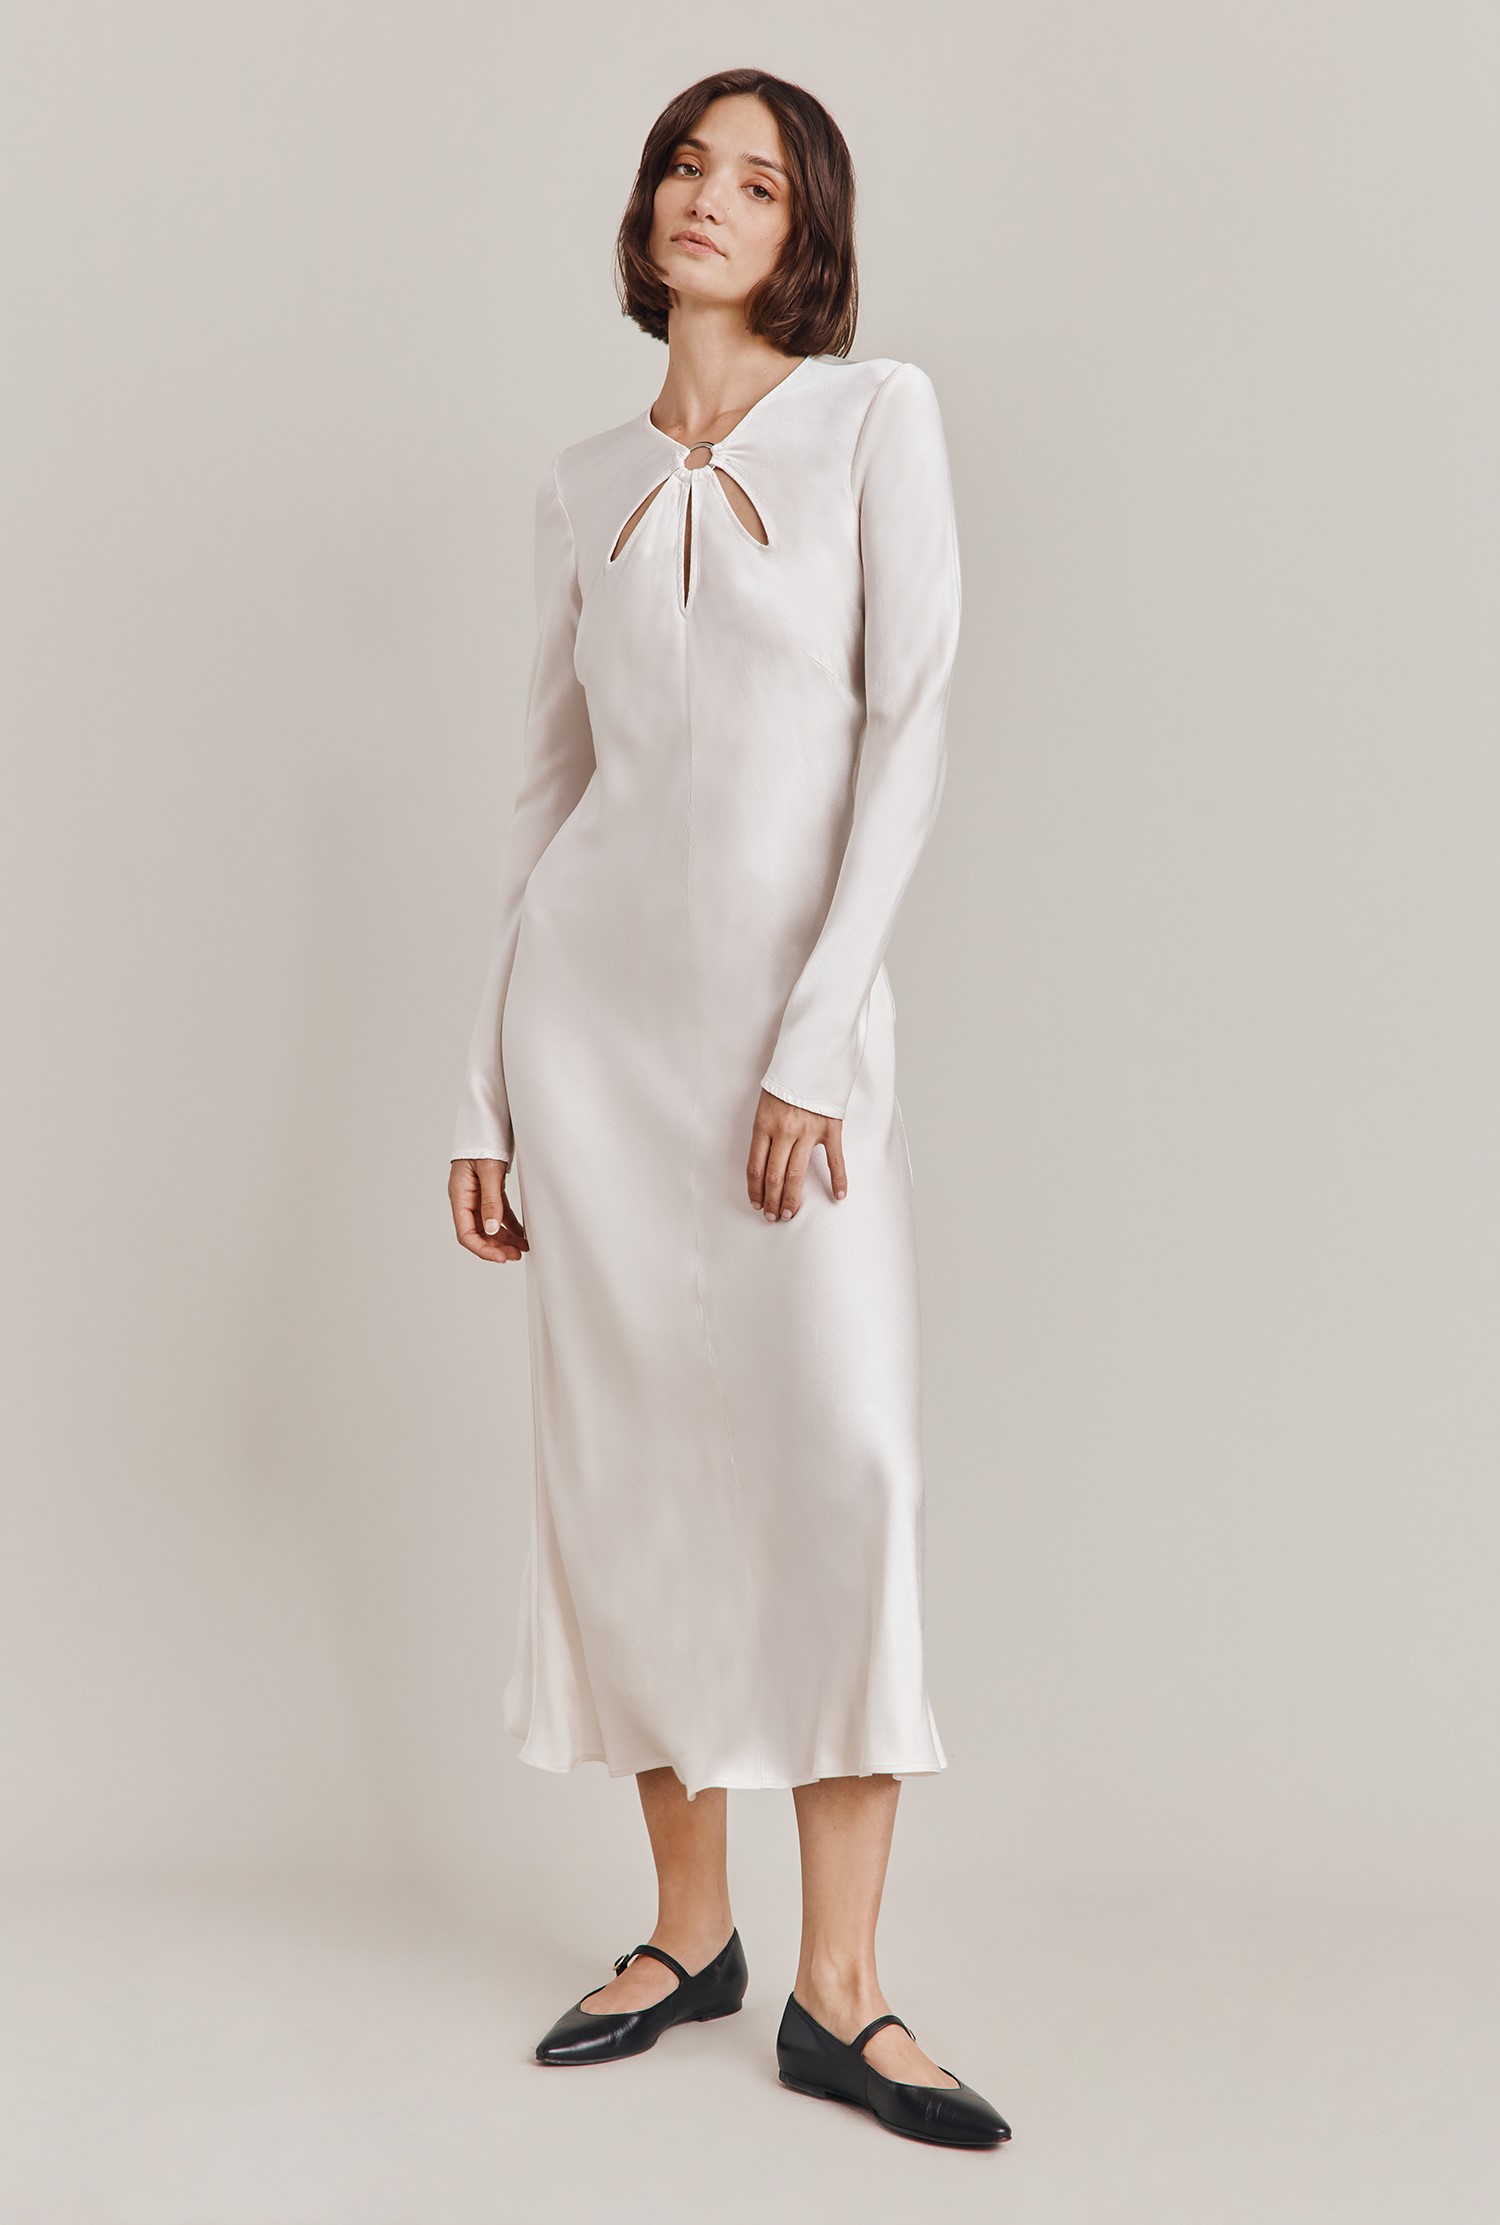 Freya Ivory Long Sleeve Satin Midi Dress | Ghost London